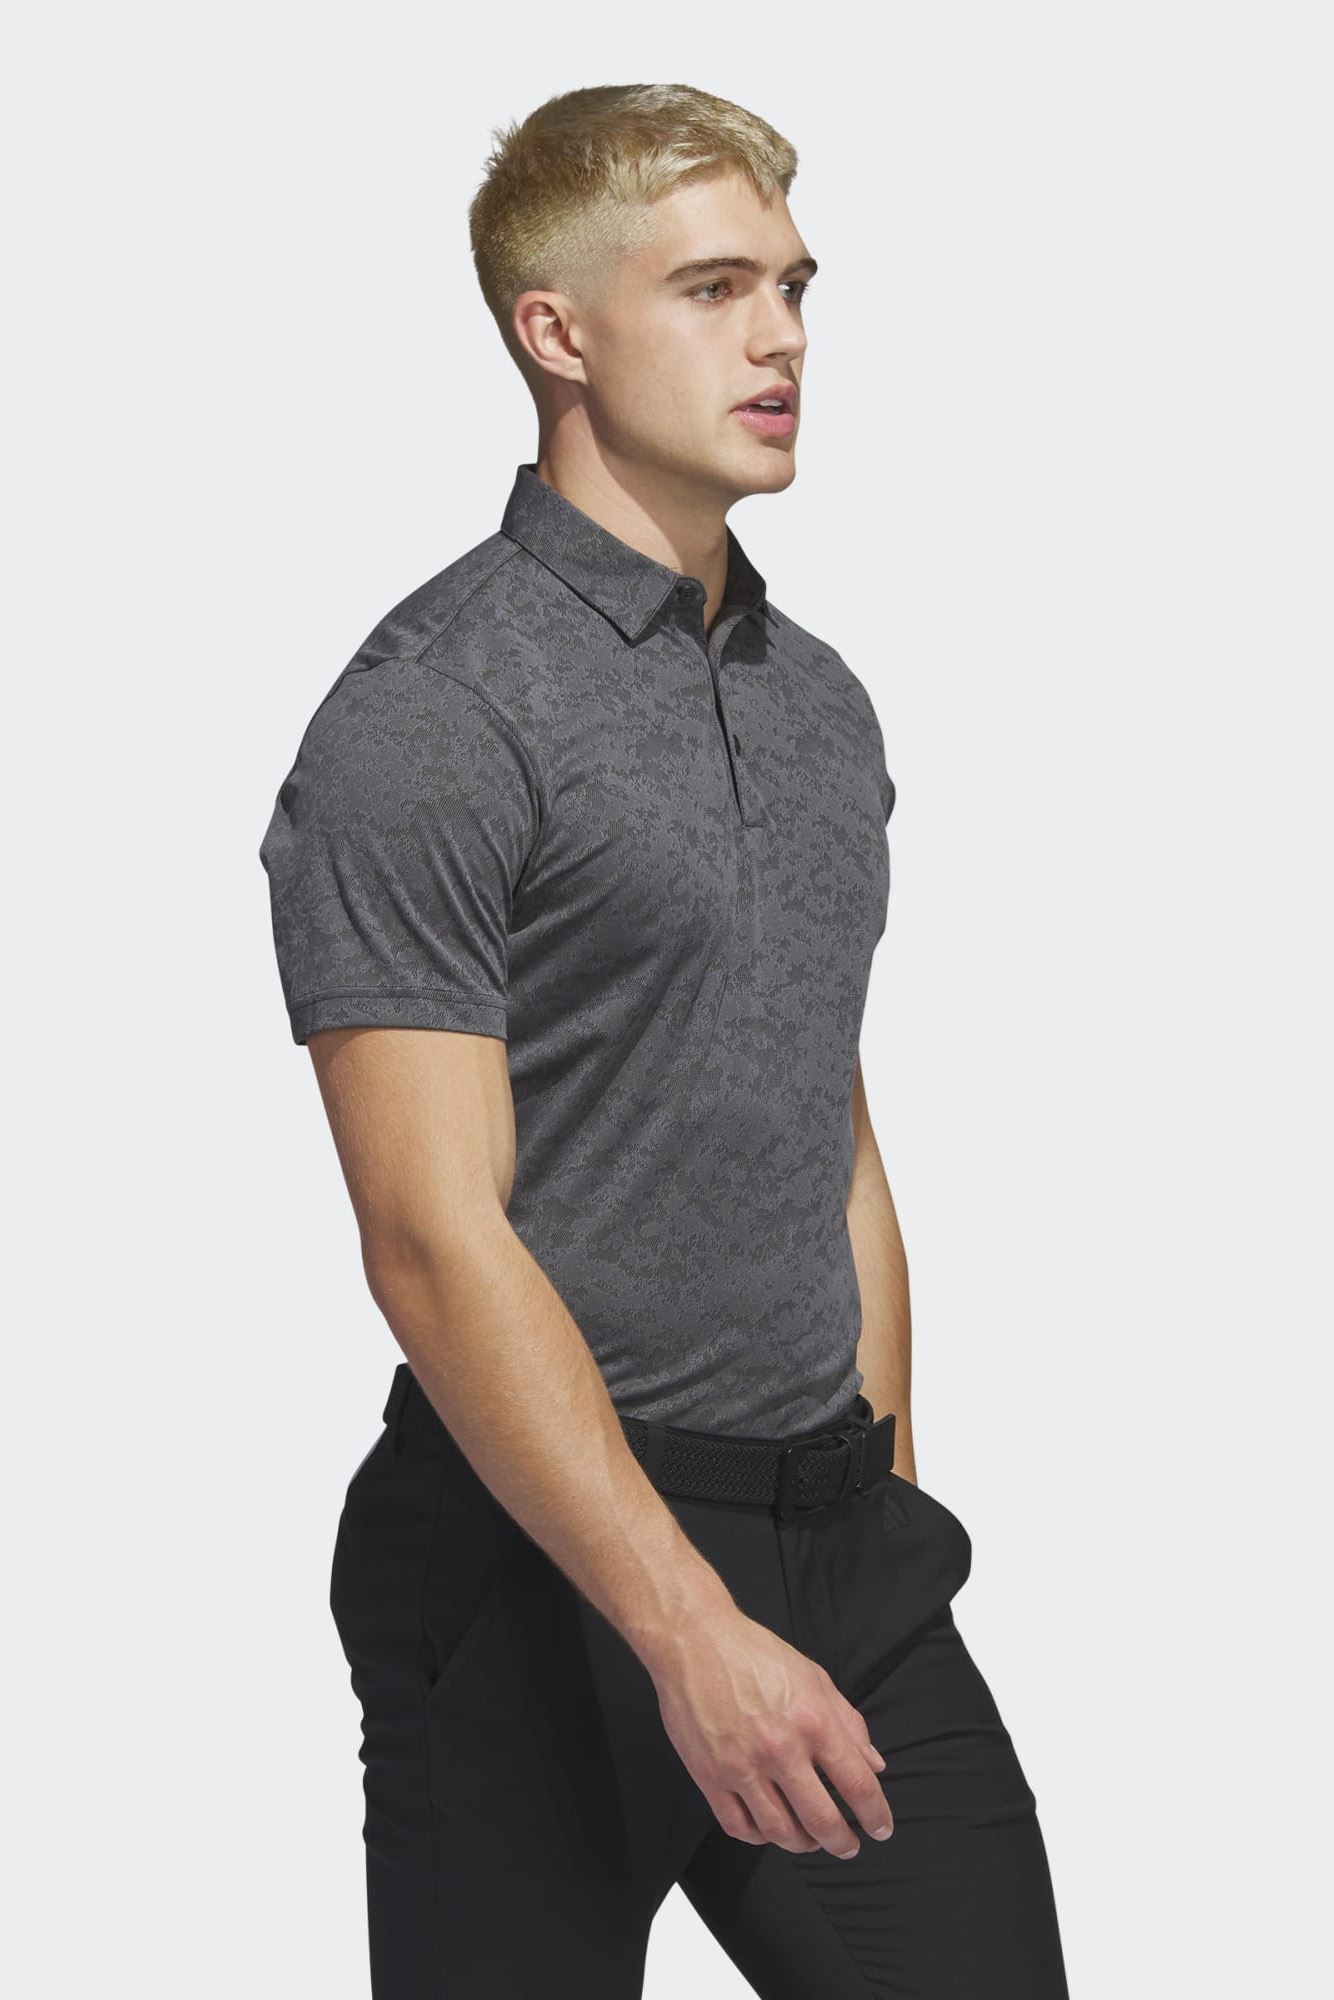 adidas Men's Textured Jacquard Polo Shirt - Grey Five / Black - IB7489